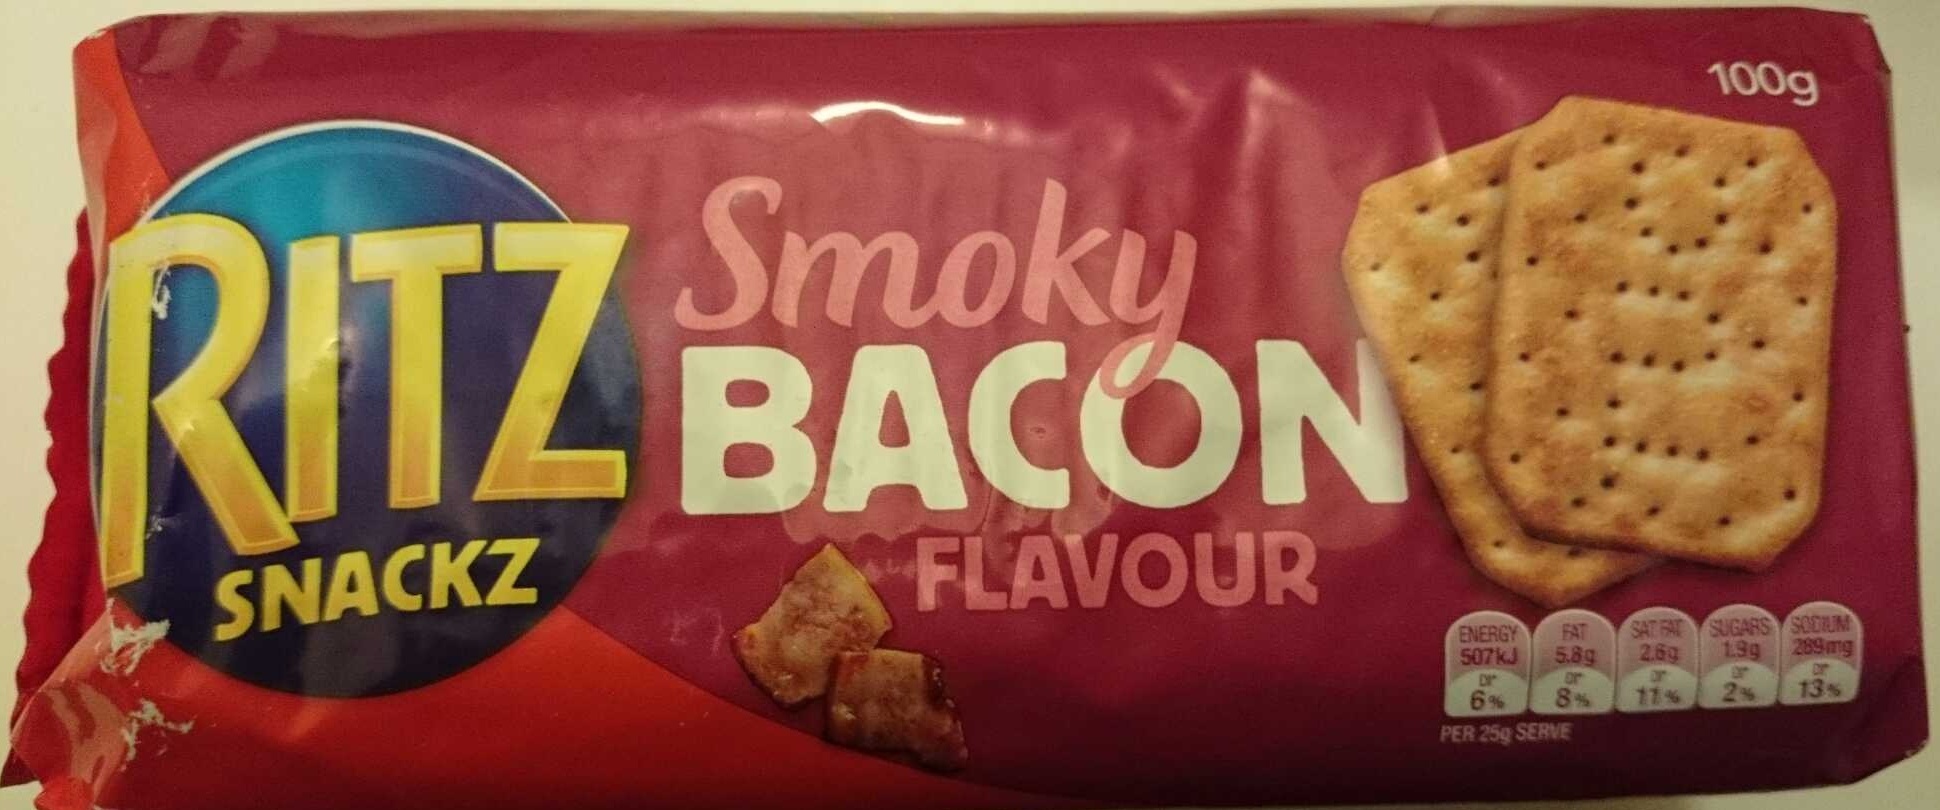 Ritz Snackz Smoky Bacon Flavour - Product